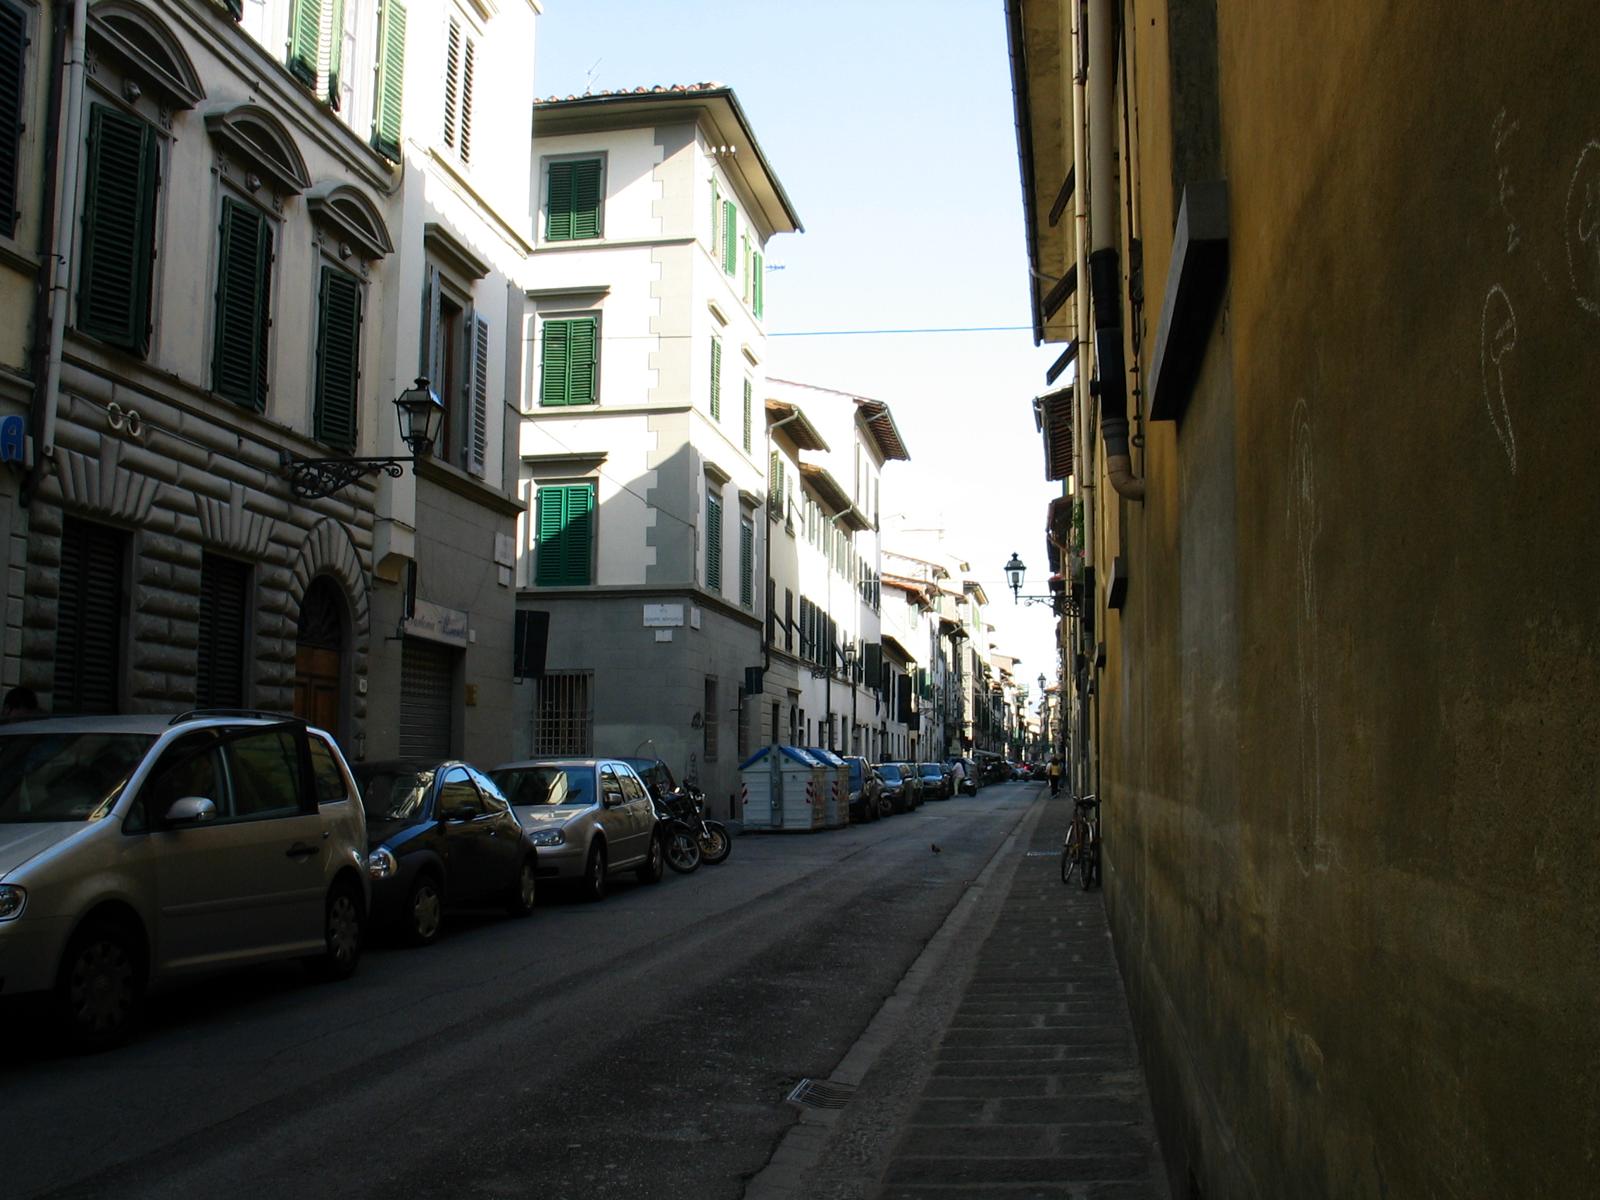 Just a street